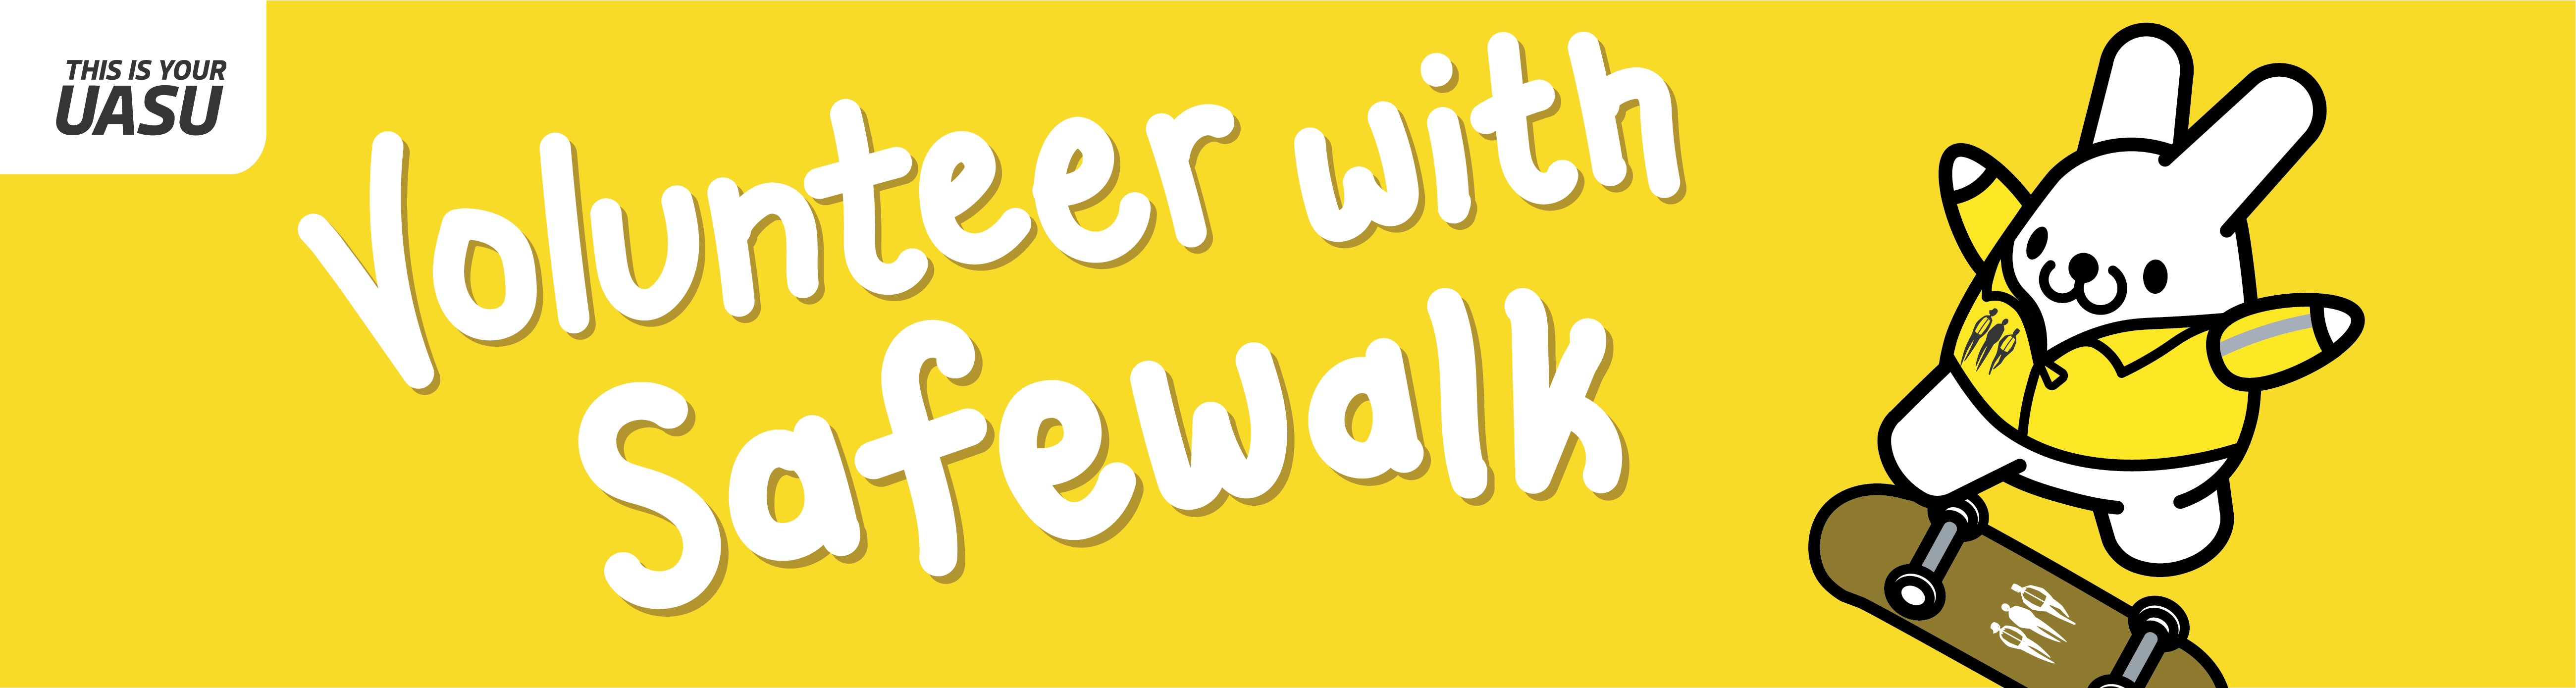 Volunteer with Safewalk